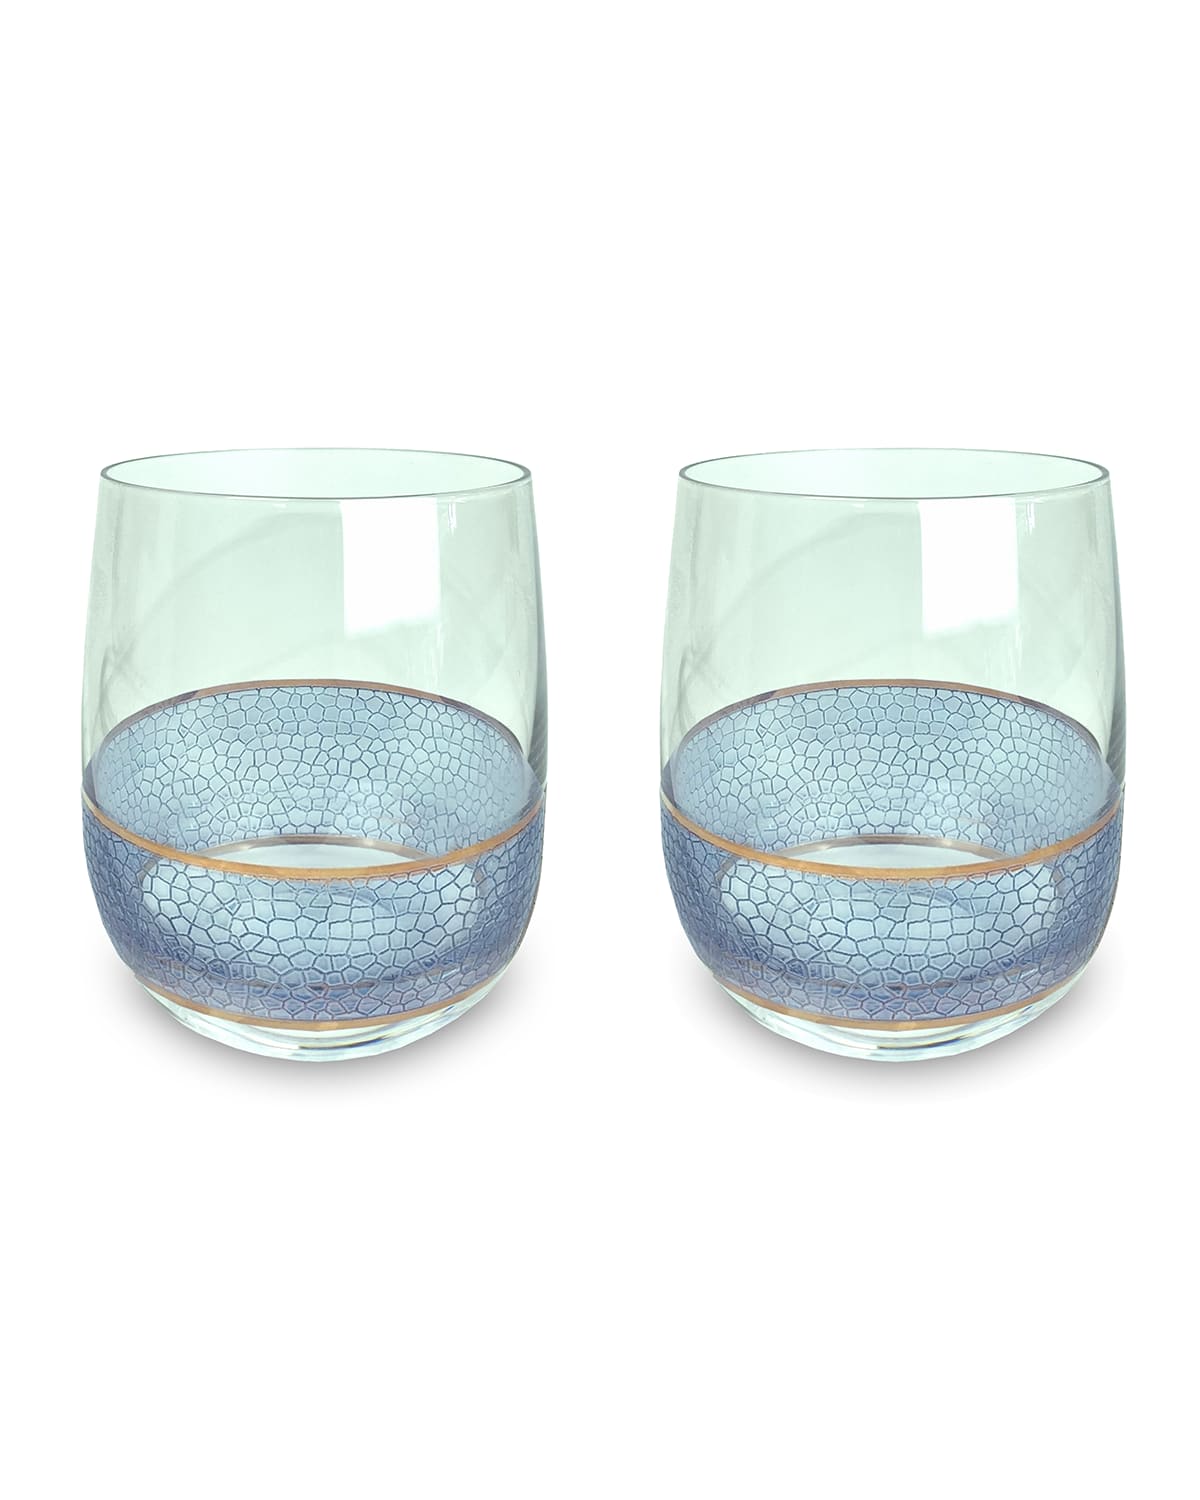 MICHAEL WAINWRIGHT PANTHERA DOUBLE OLD-FASHIONED GLASSES, SET OF 2,PROD239630133